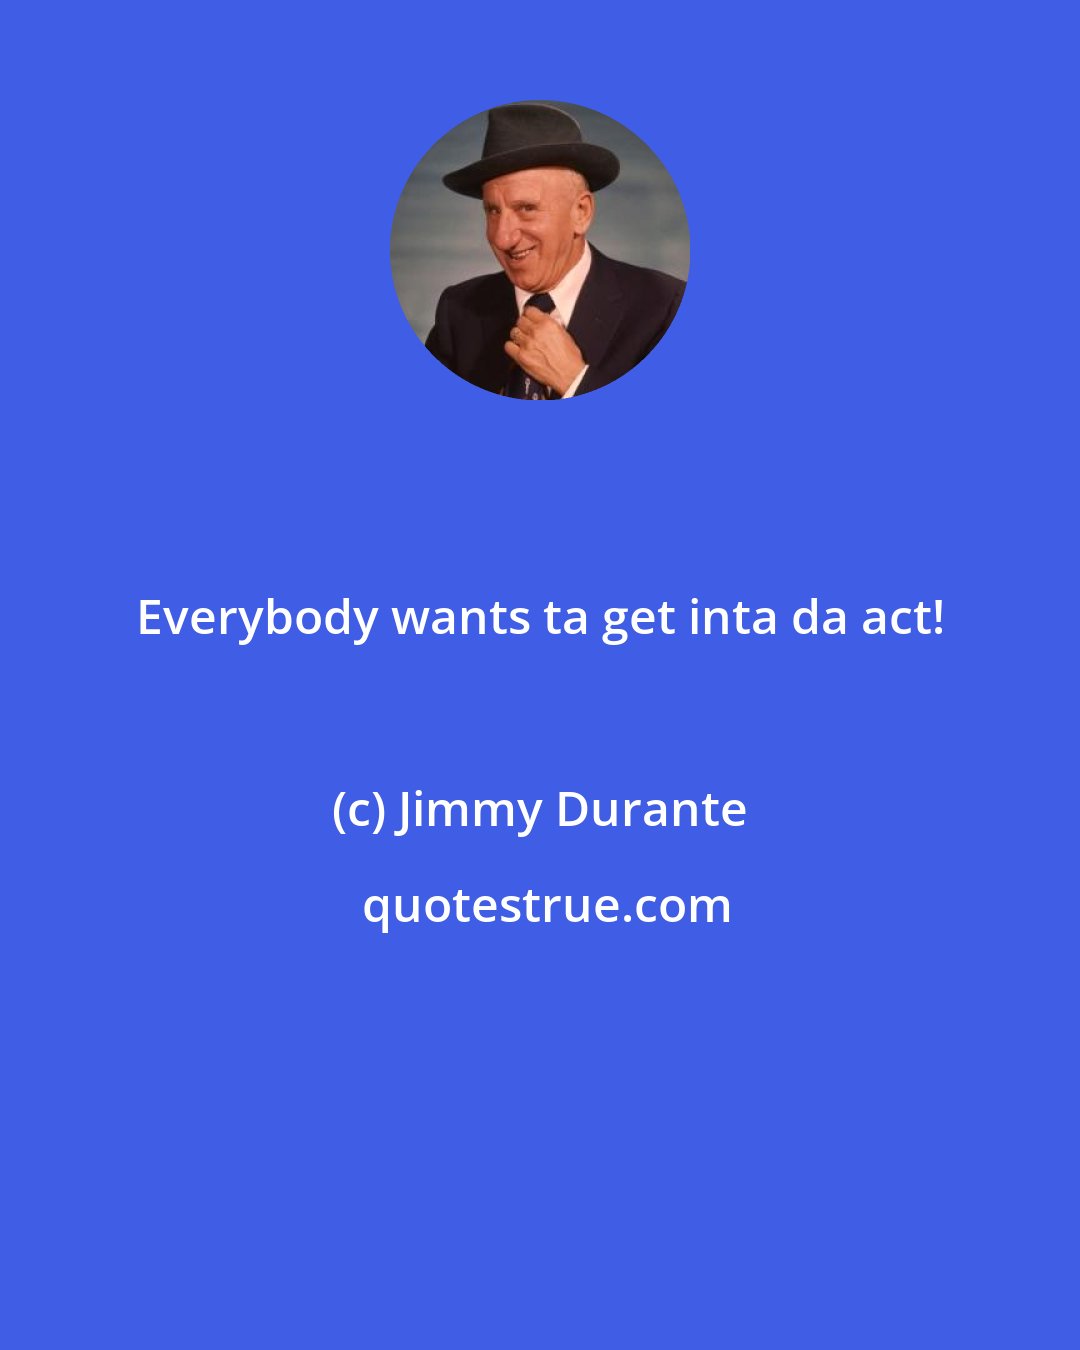 Jimmy Durante: Everybody wants ta get inta da act!